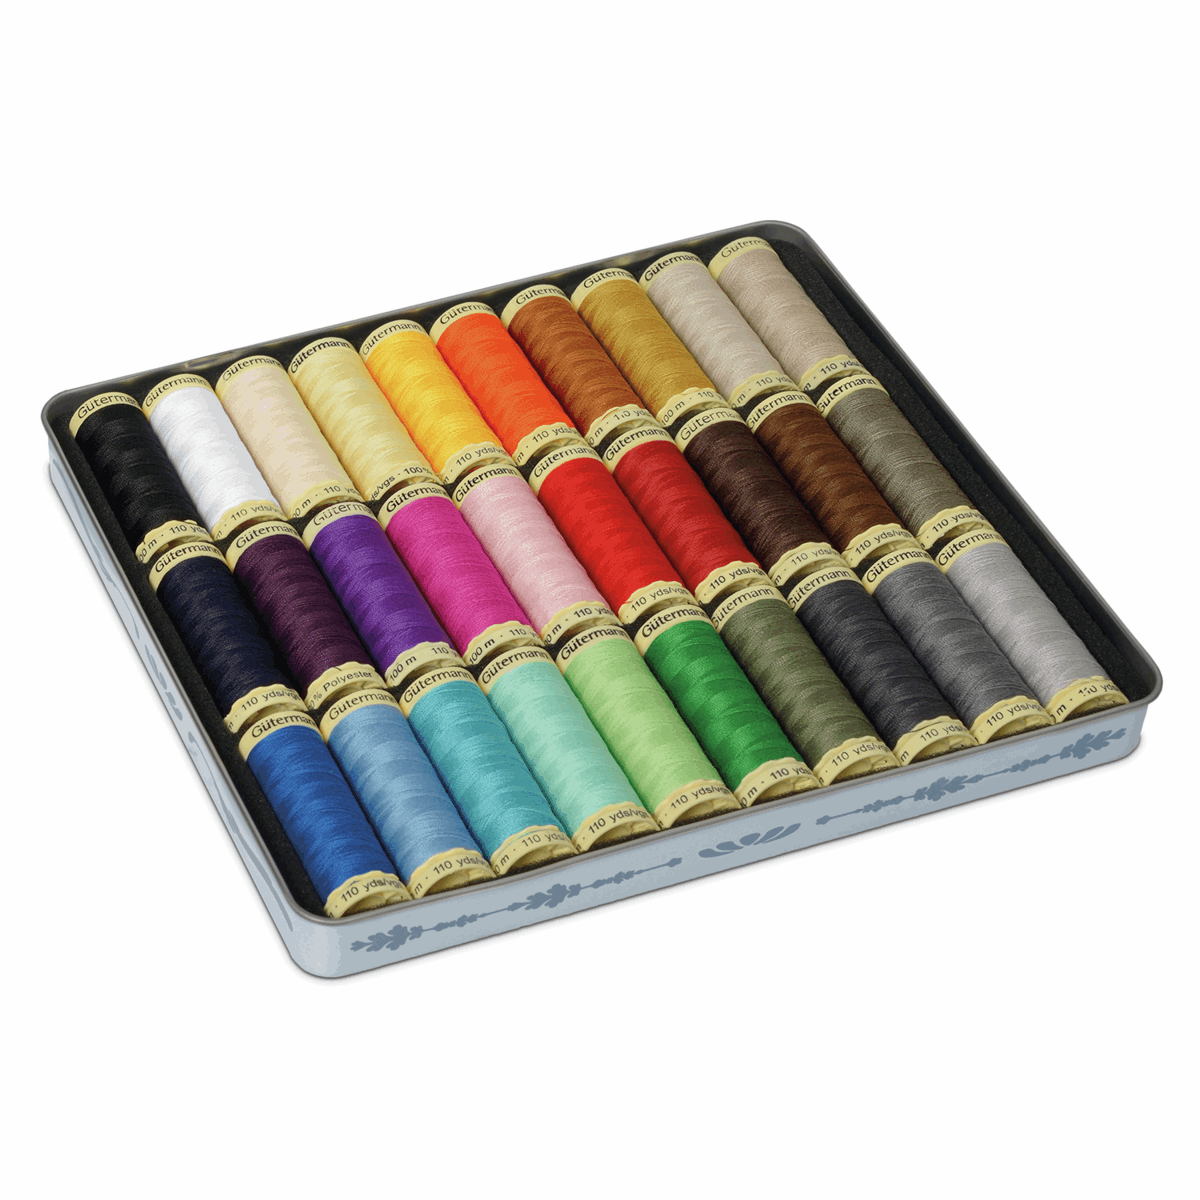 Gutermann Nostalgic Thread Box 1930 - Sew-All: 30 x 100m: Assorted Shades